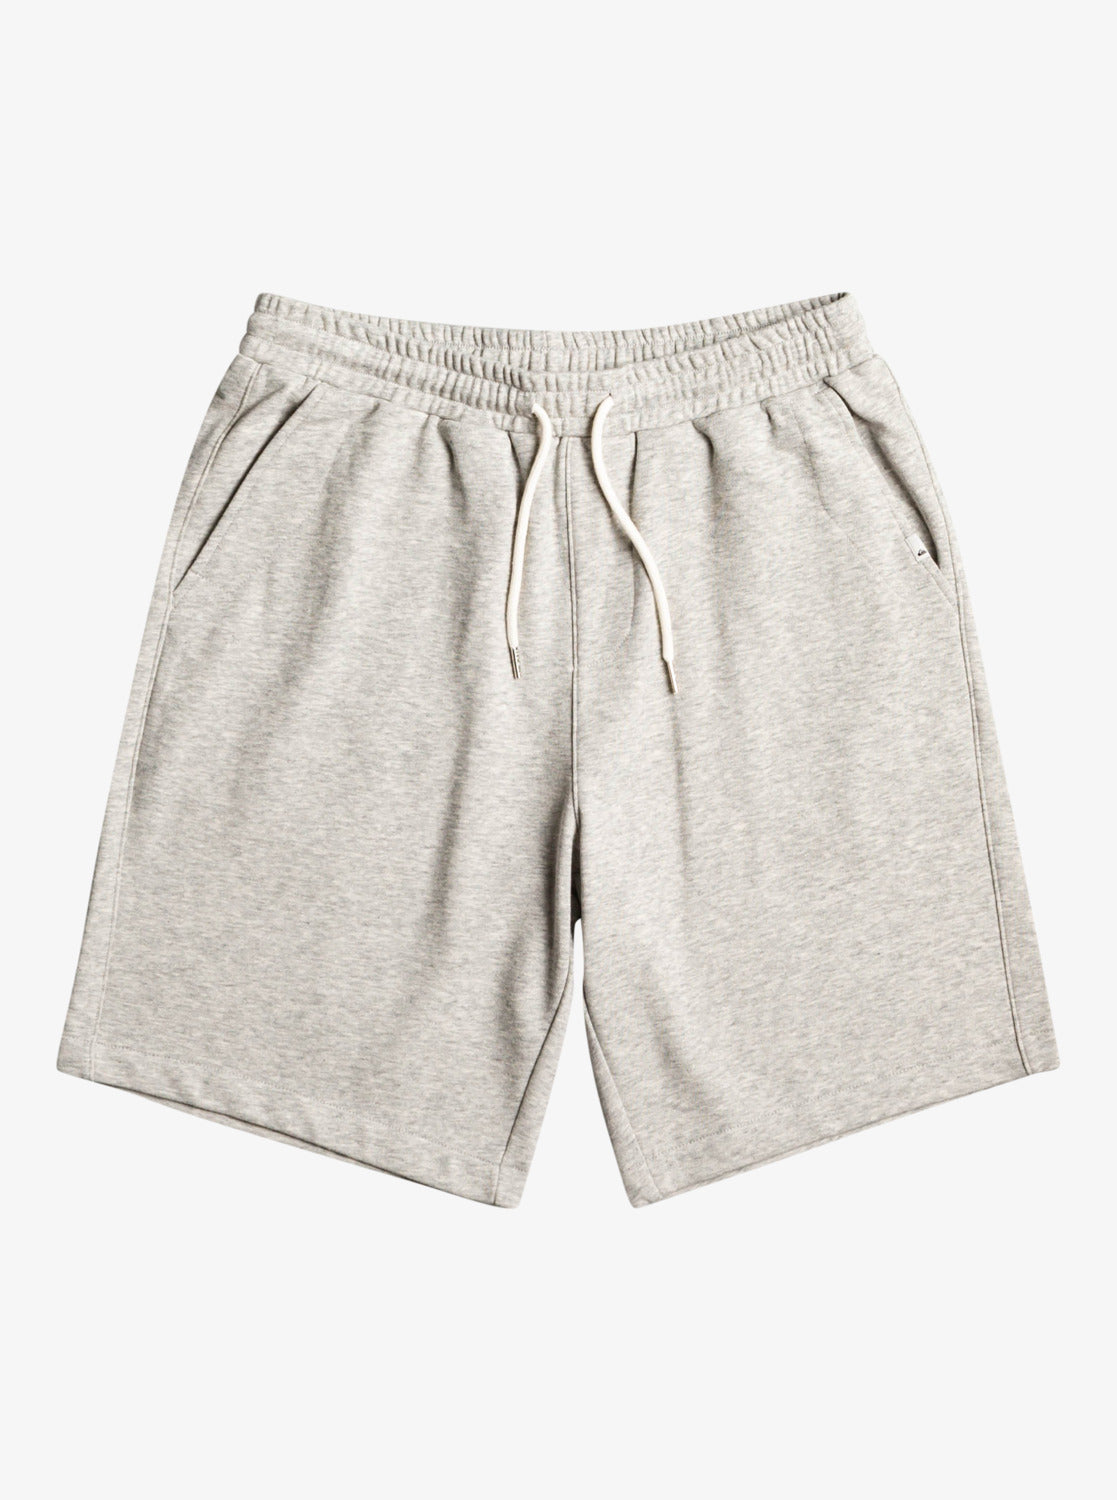 Essentials Sweat Shorts - Light Grey Heather